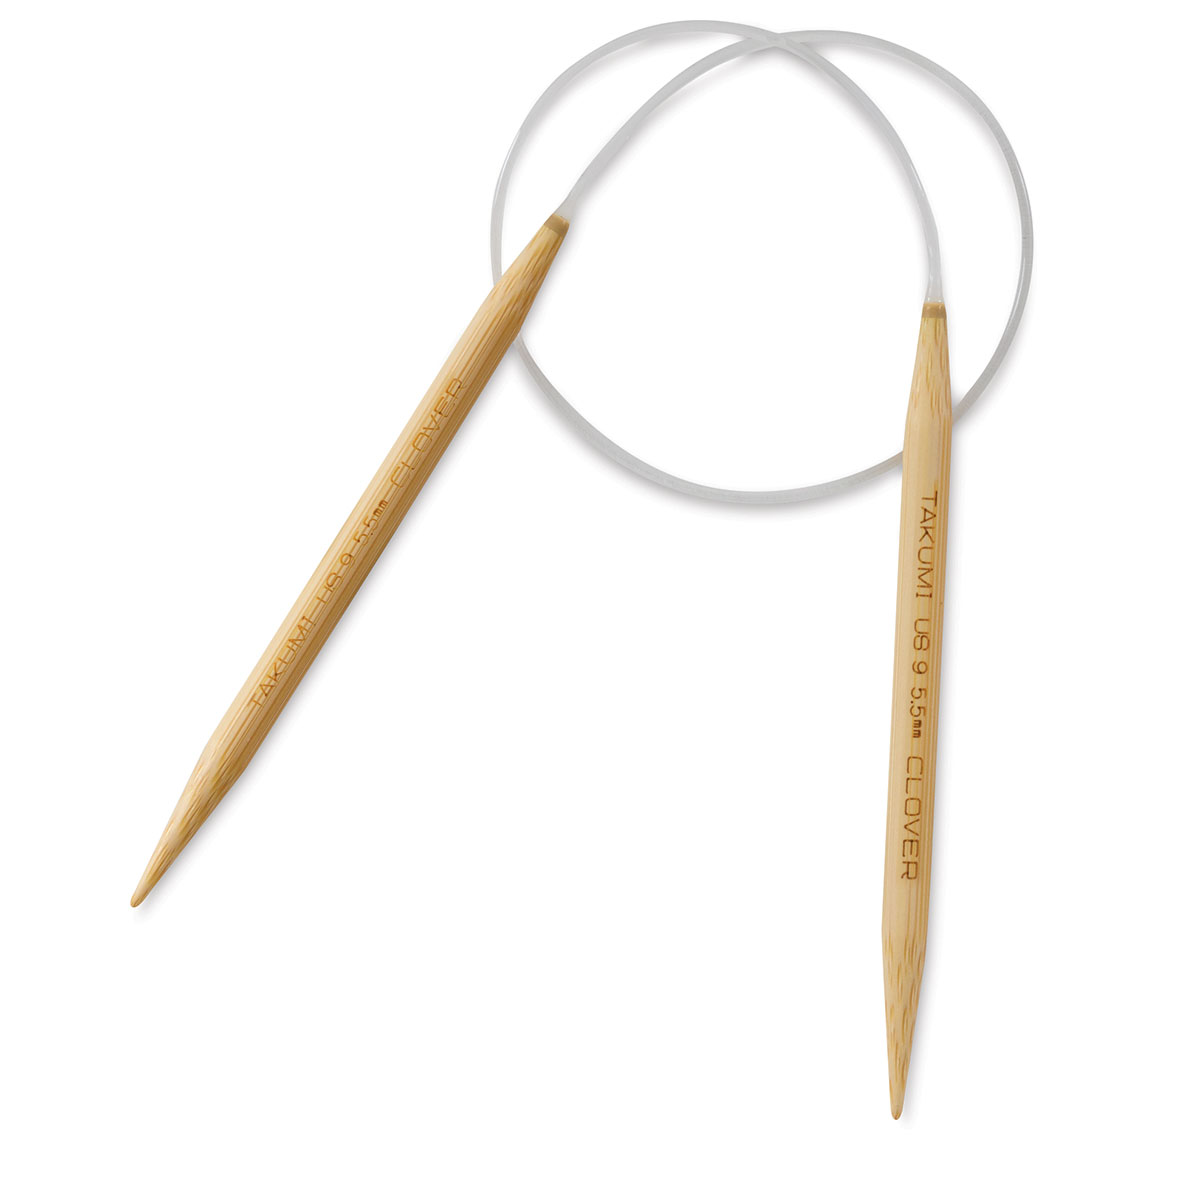 Clover Takumi Bamboo Straight Knitting Needles - Size 10, 9 Long